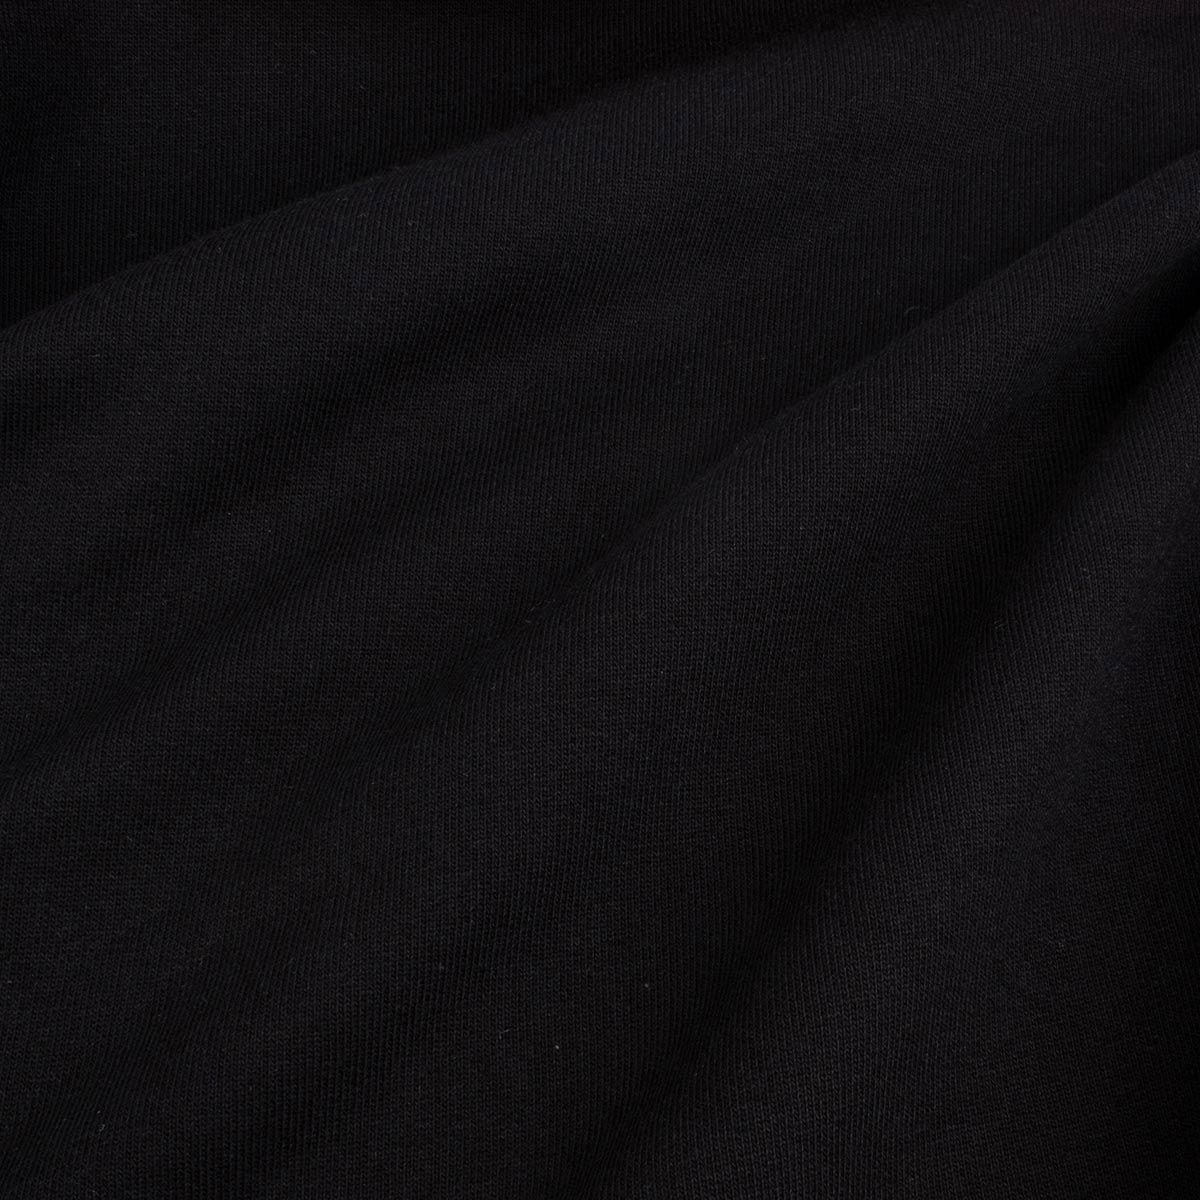 Heavy black organic cotton sweat fabric